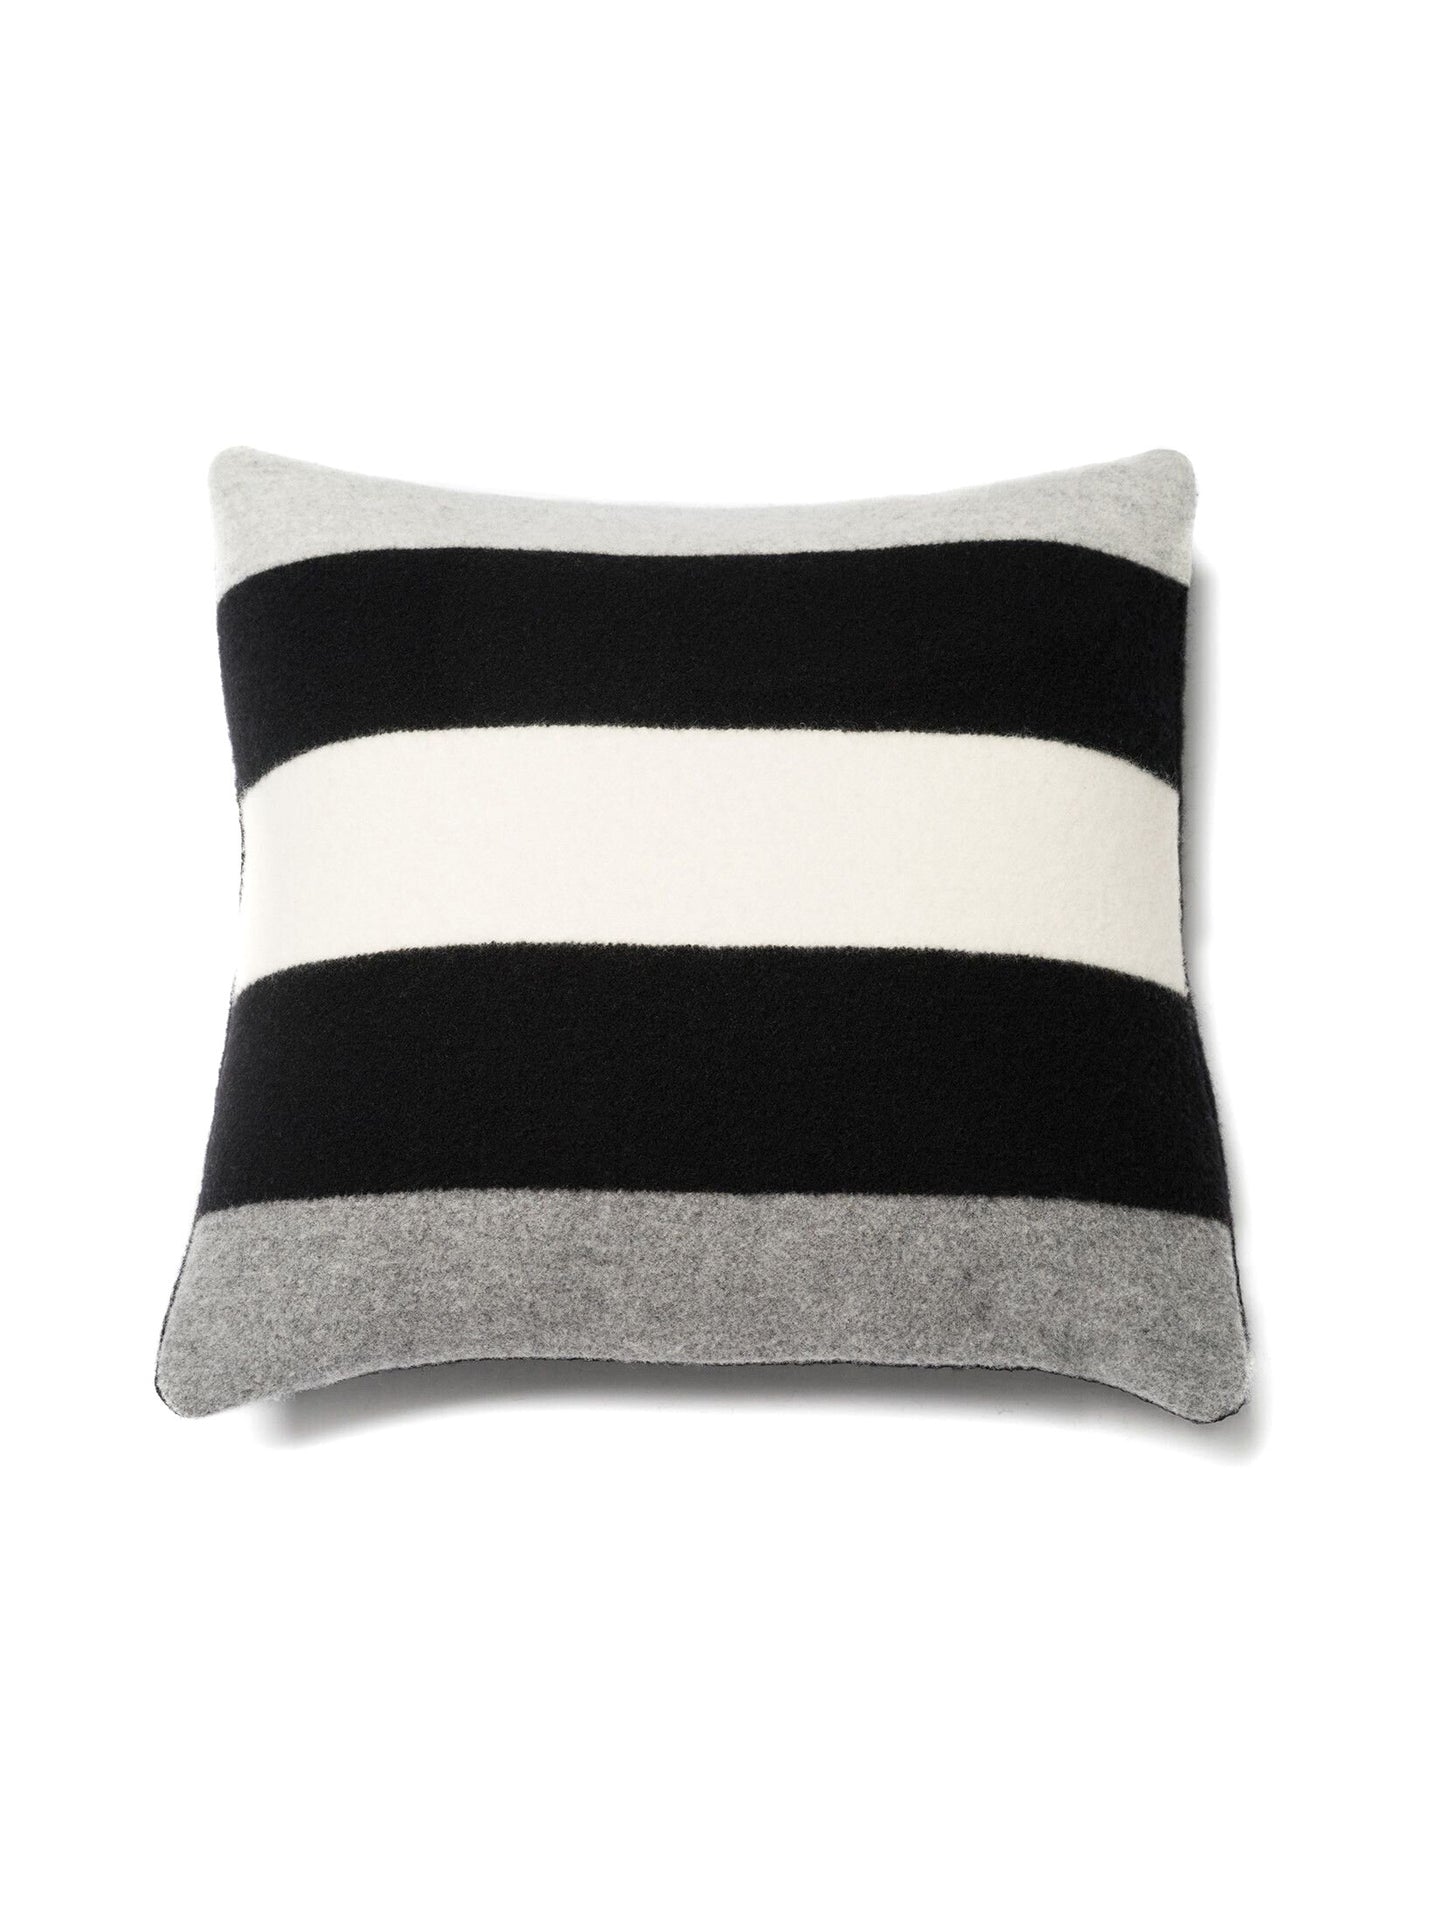 Faribault Merino Wool Revival Stripe Pillow Weston Table